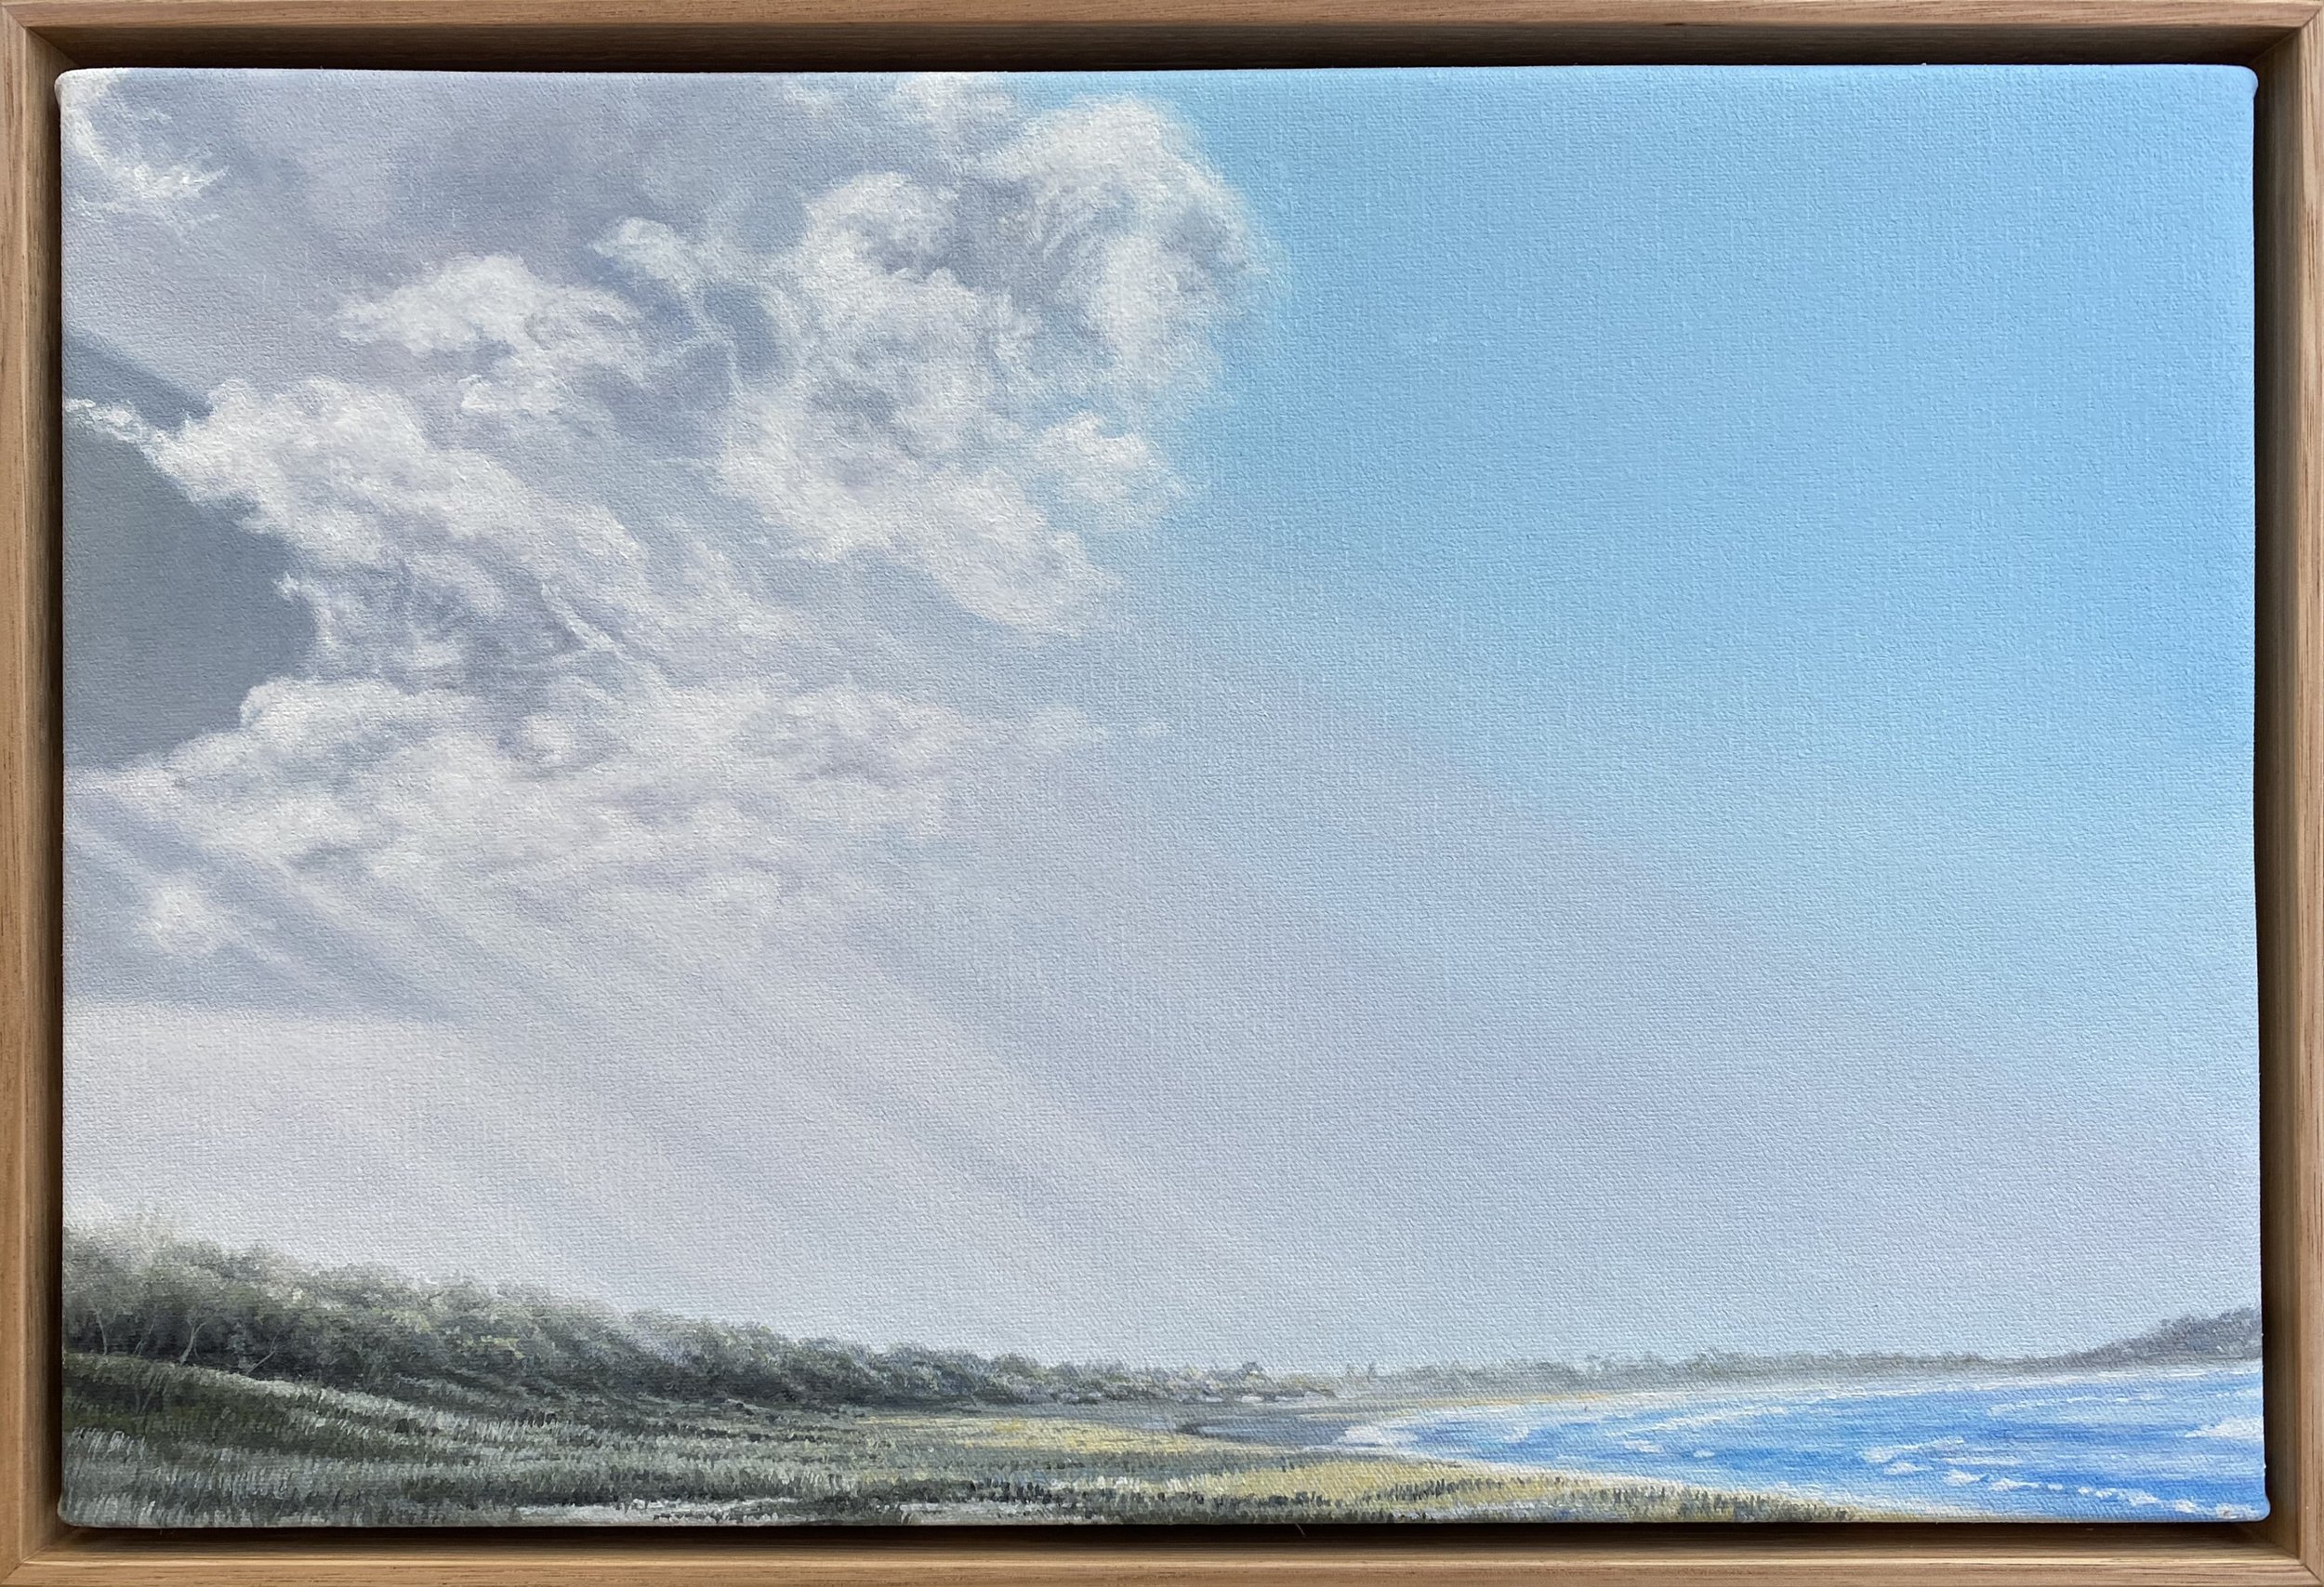   Little Coastal View 1  Oil on Canvas 25 x 37cm Framed Sale Price $800.00 AUD  